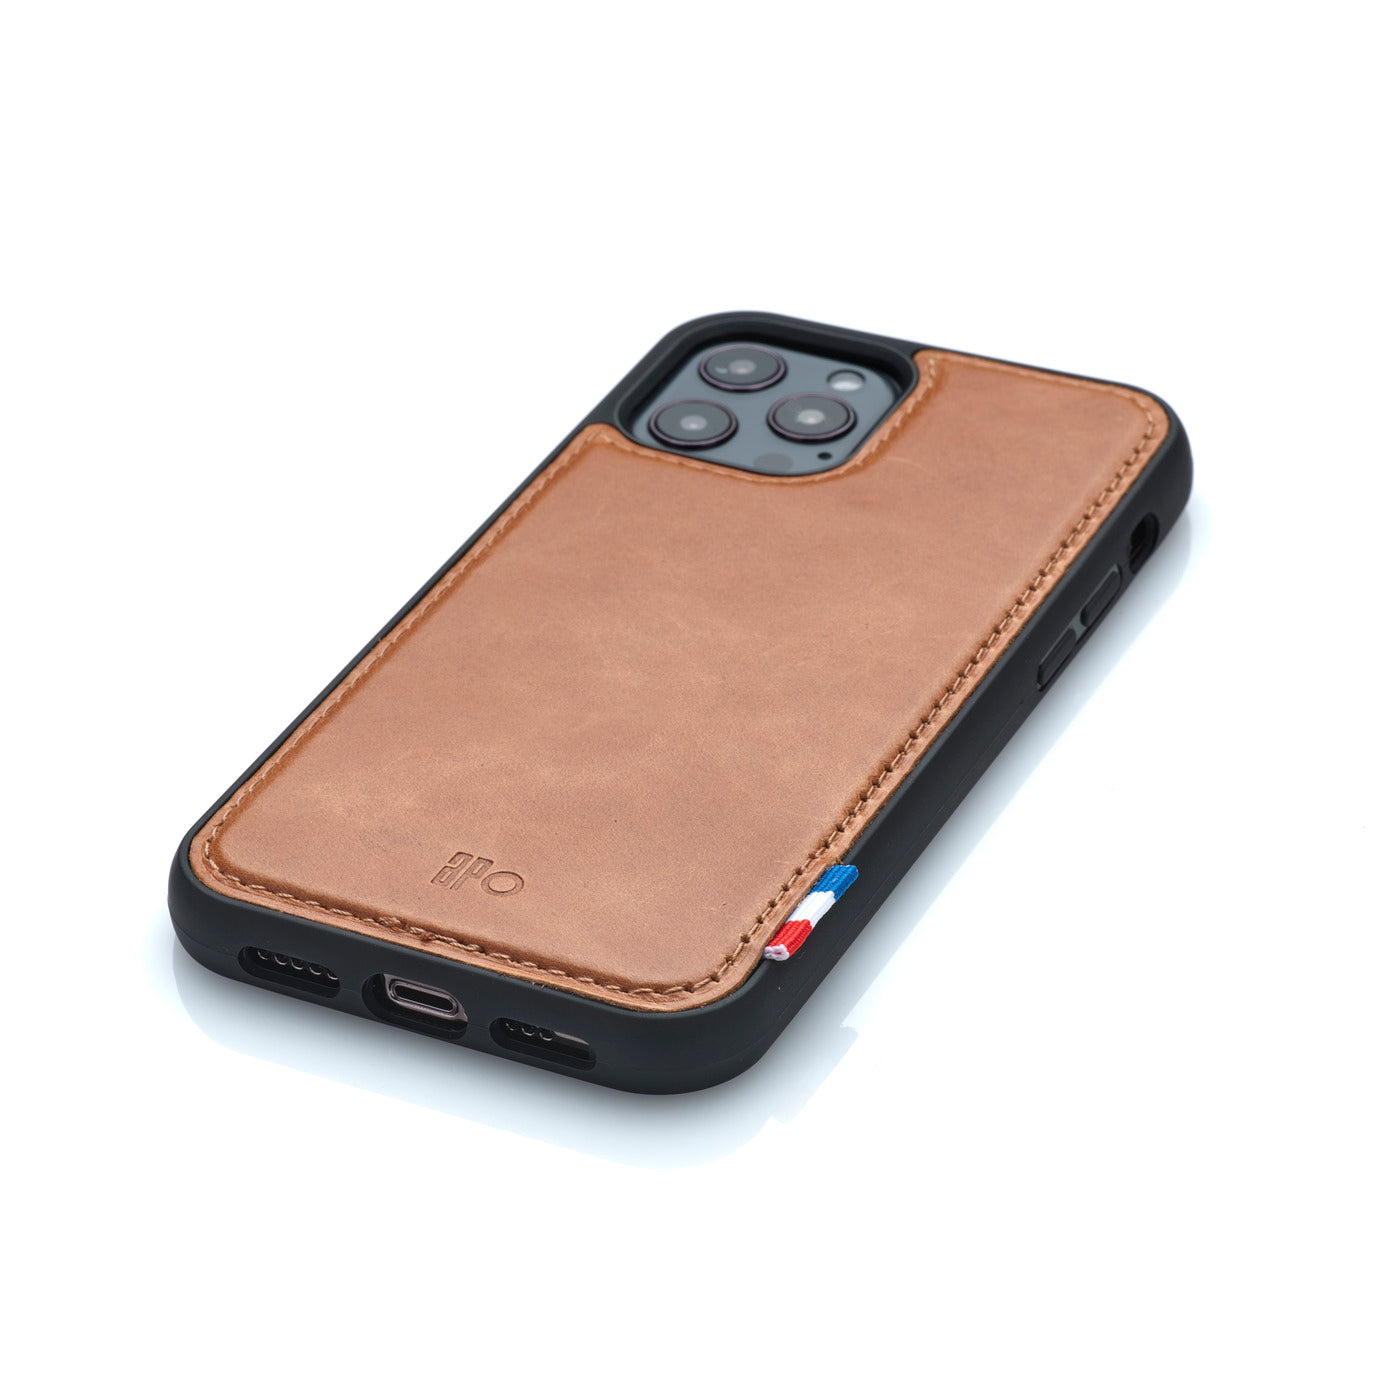 SAM - Coque iPhone 12 / 12 Pro en cuir patiné - Cognac